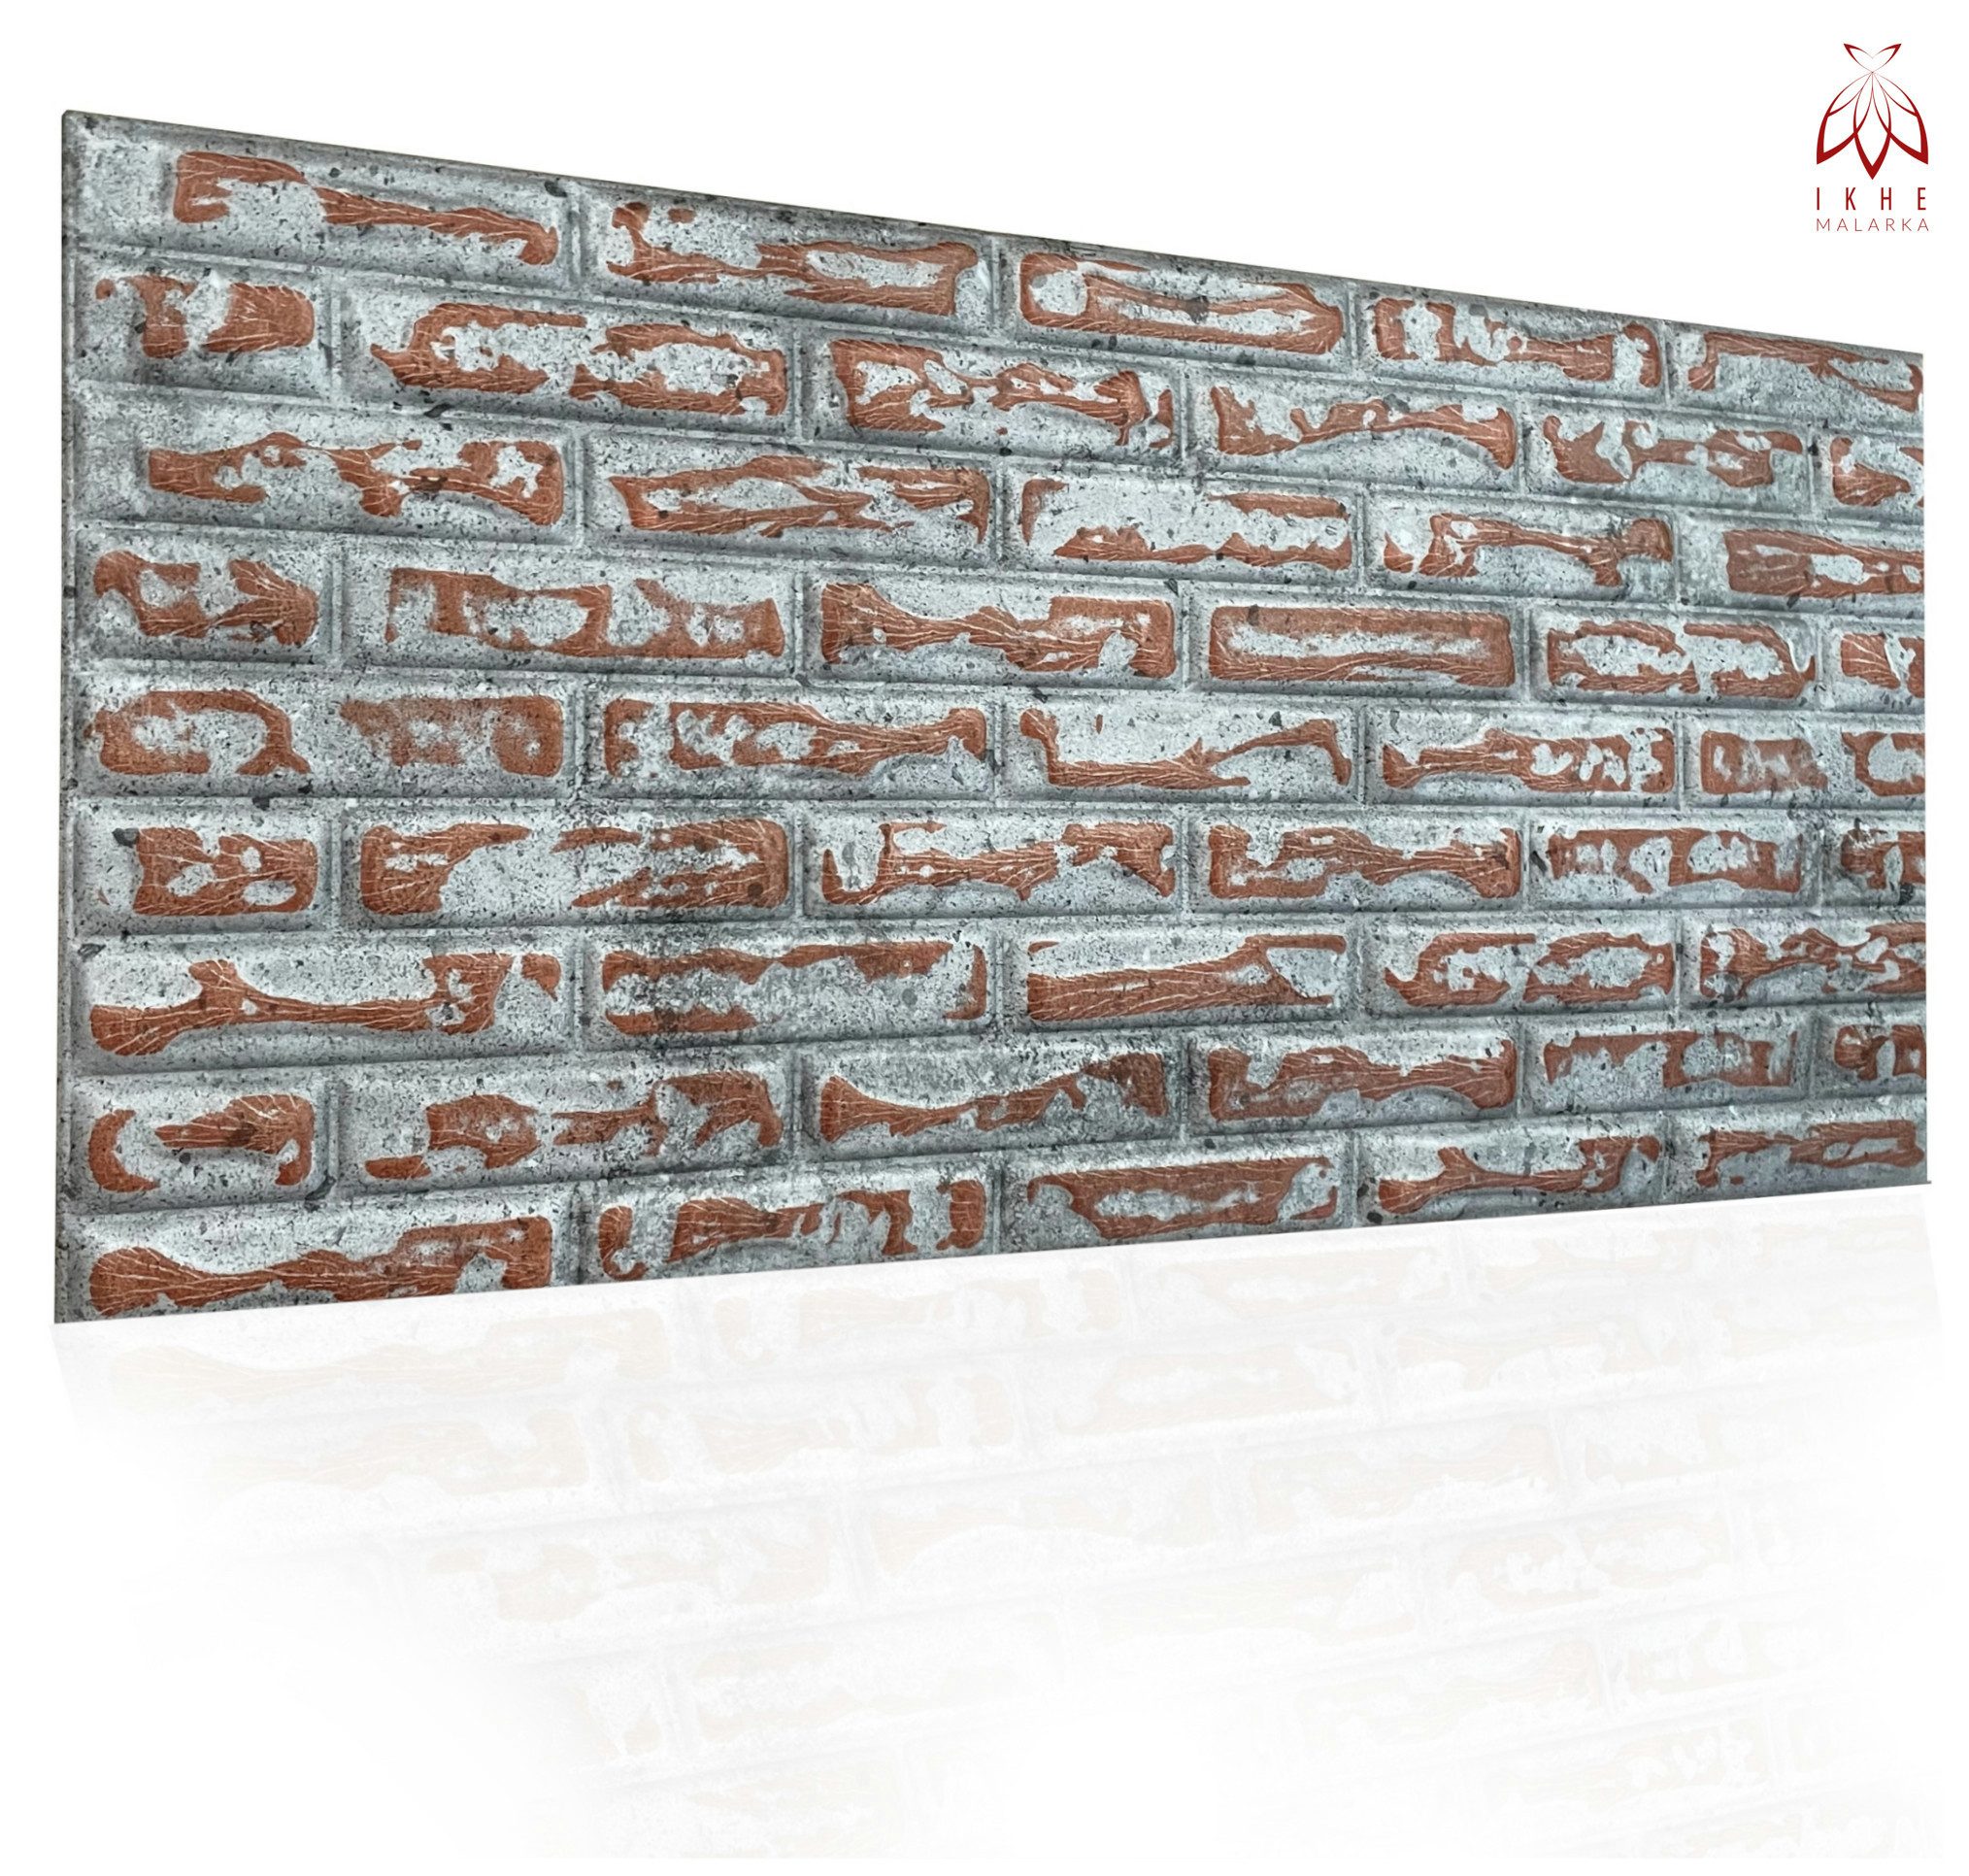 IKHEMalarka 3D Wandpaneel 4,10,16 Quadratmeter Polystyrol Deckenpaneele XL Brick, BxL: 50,00x100,00 cm, 0,50 qm, (8-tlg) Ziegeloptik Steinoptik Backstein Wandpaneele